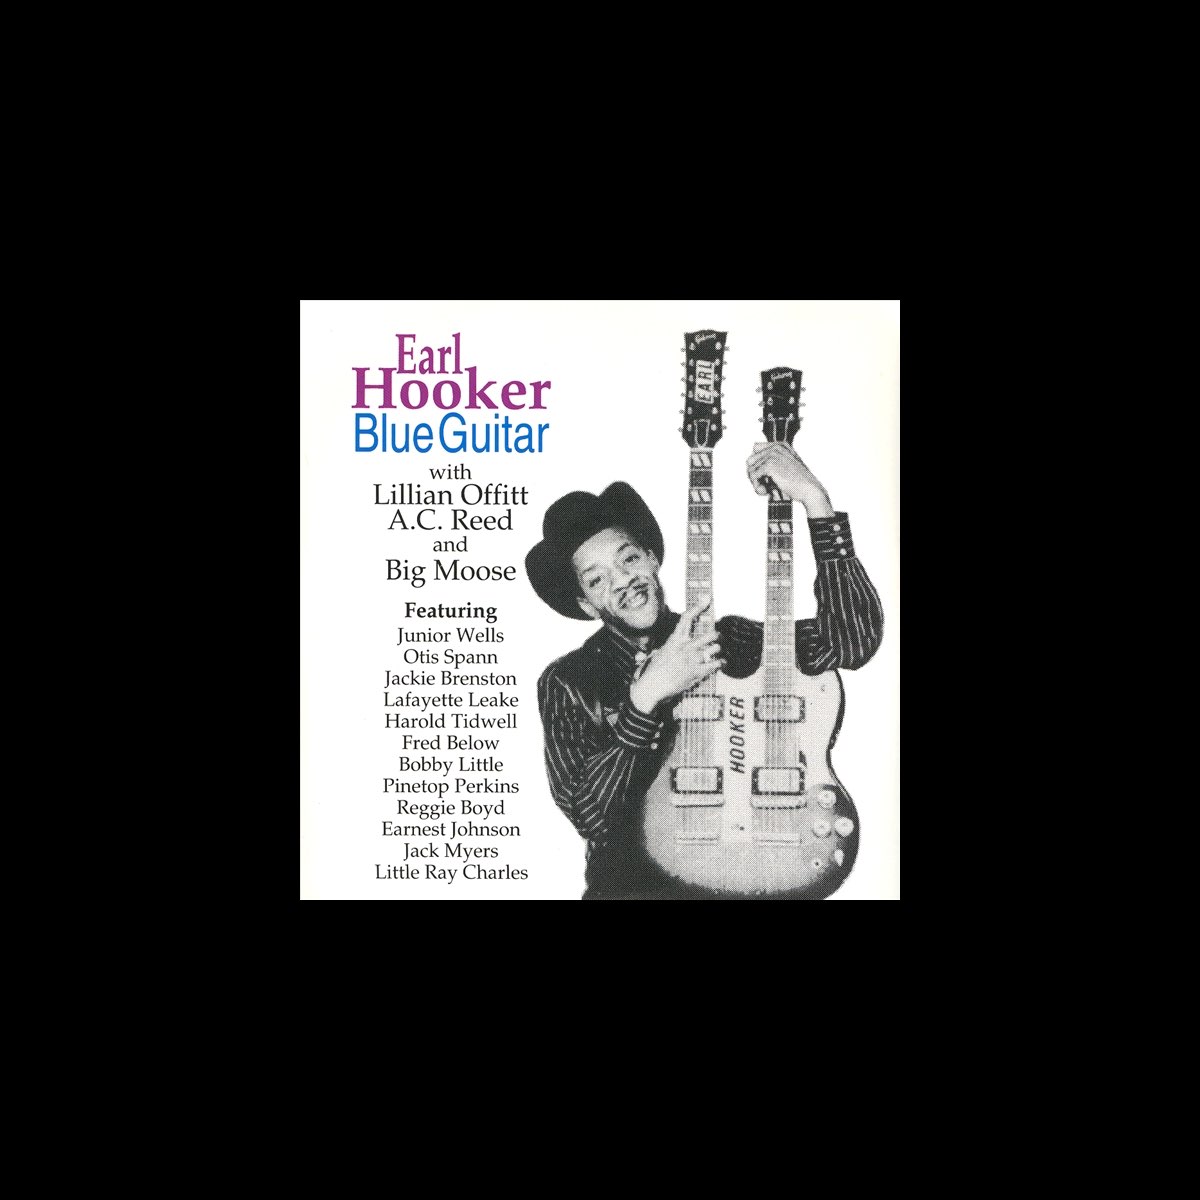 Blue Guitar - Album by Earl Hooker - Apple Music